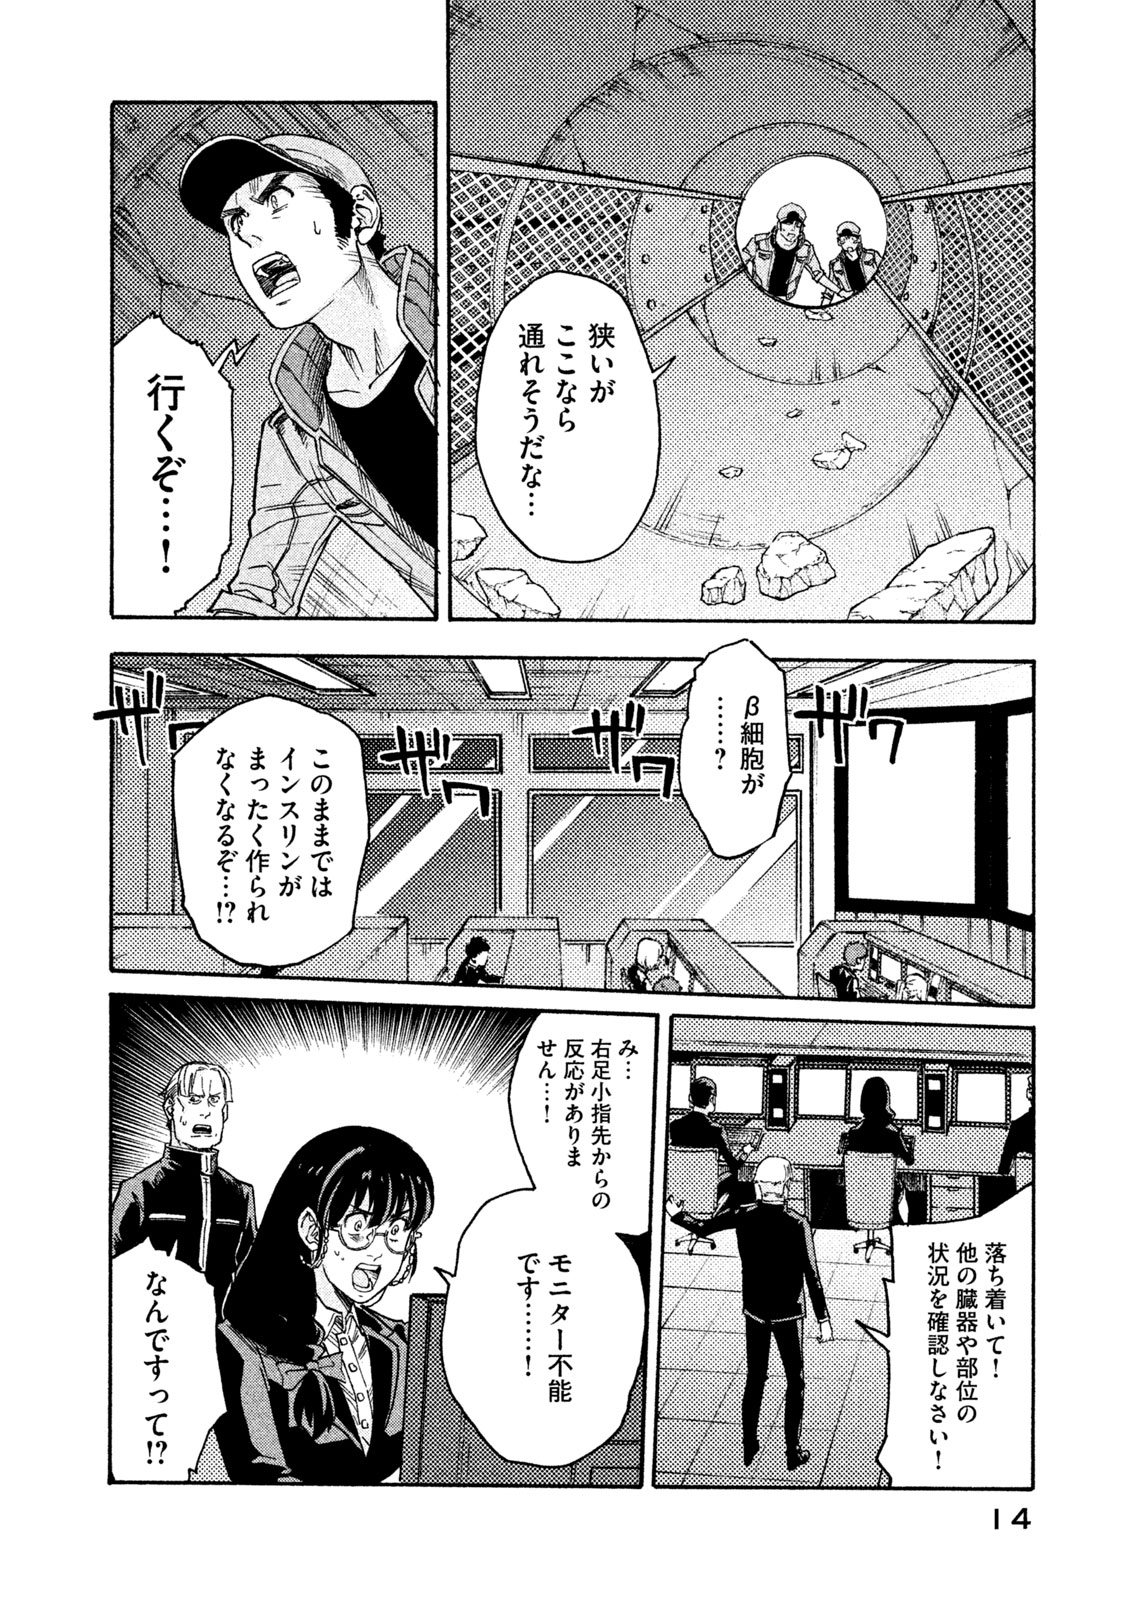 Hataraku Saibou BLACK - Chapter 25 - Page 16